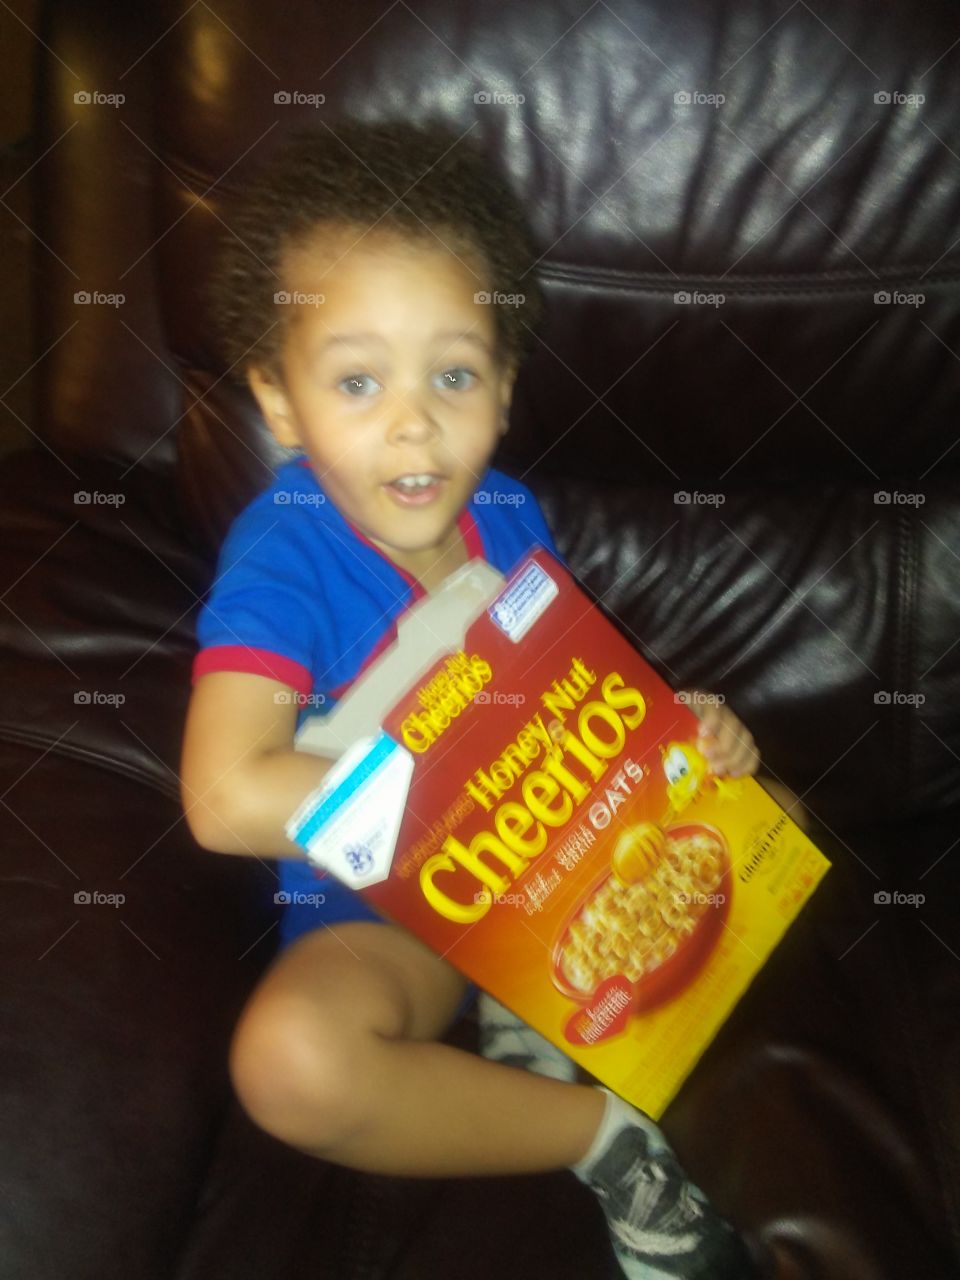 caught in the Cheerios